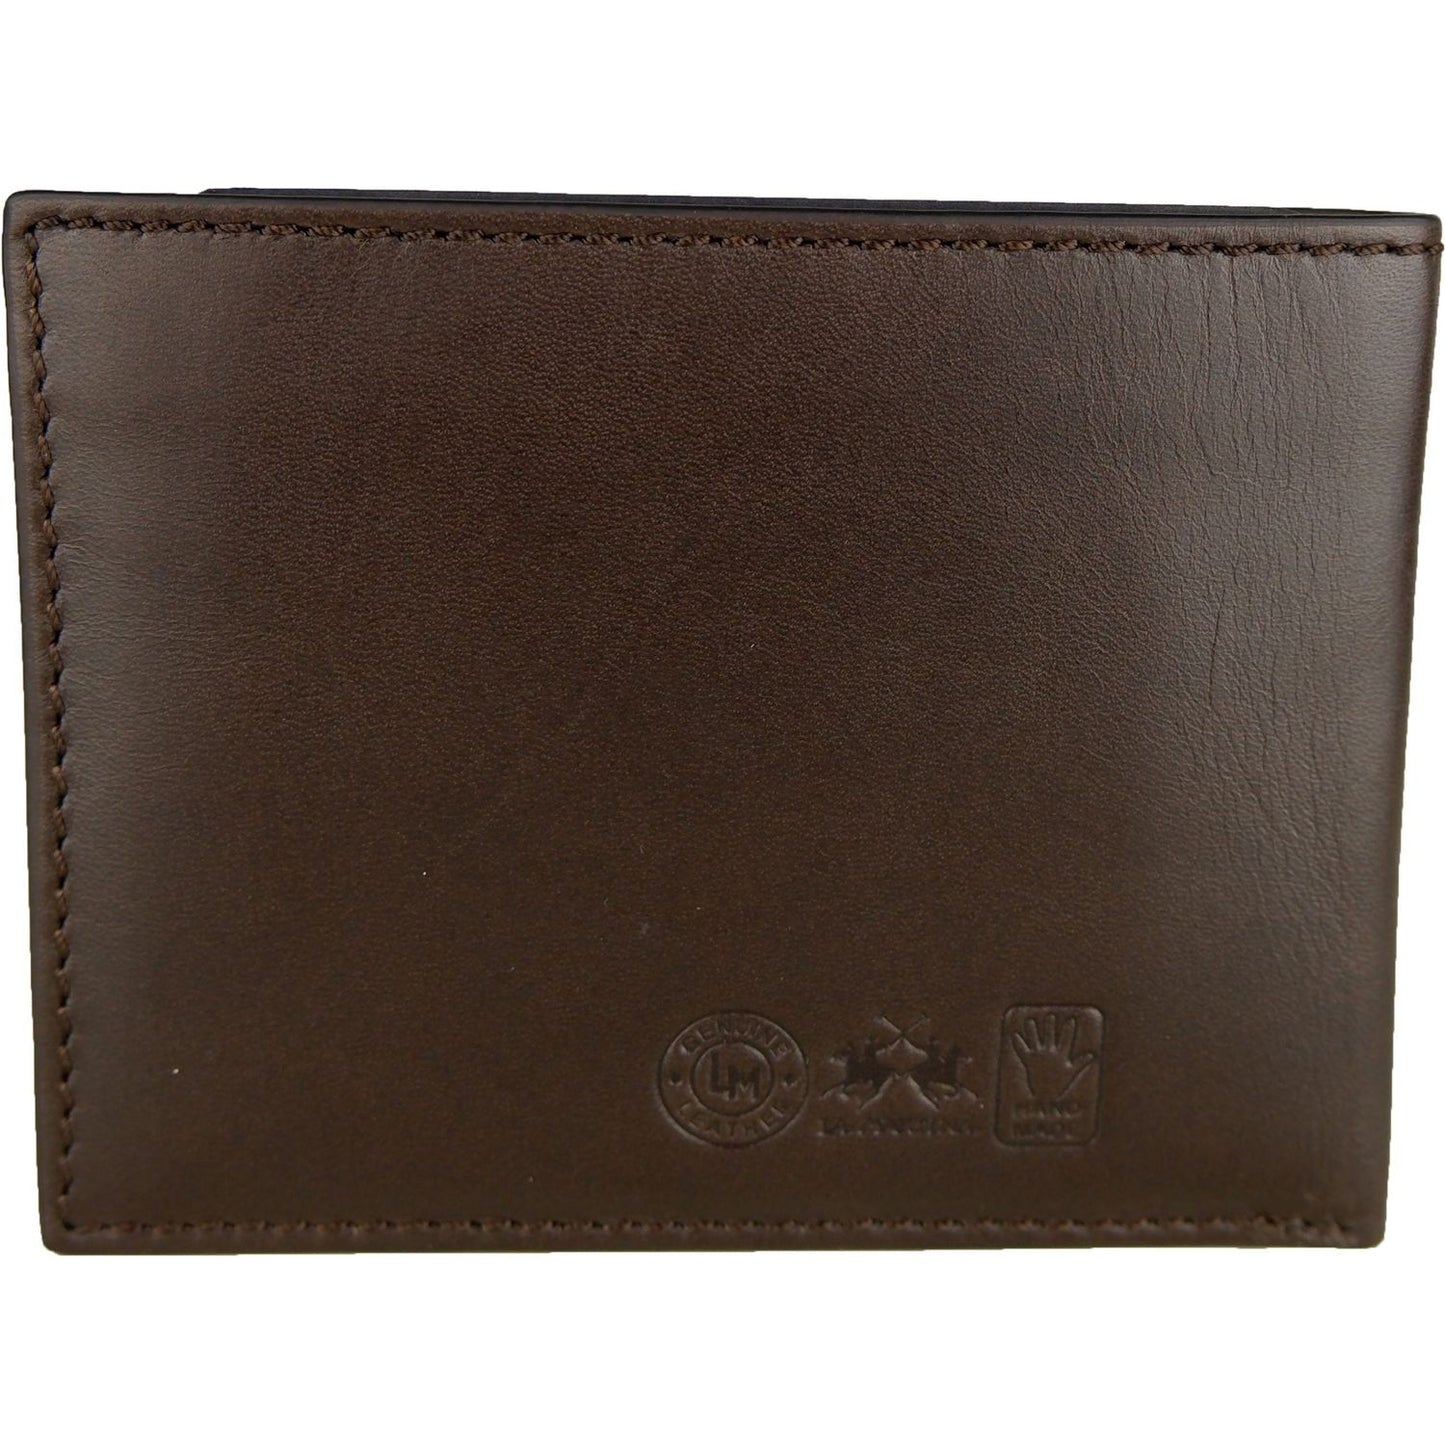 La Martina Elegant Dark Brown Leather Wallet la-martina-wallet-3 MAN WALLETS product-6700-958299524-scaled-3543ed23-0e8.jpg